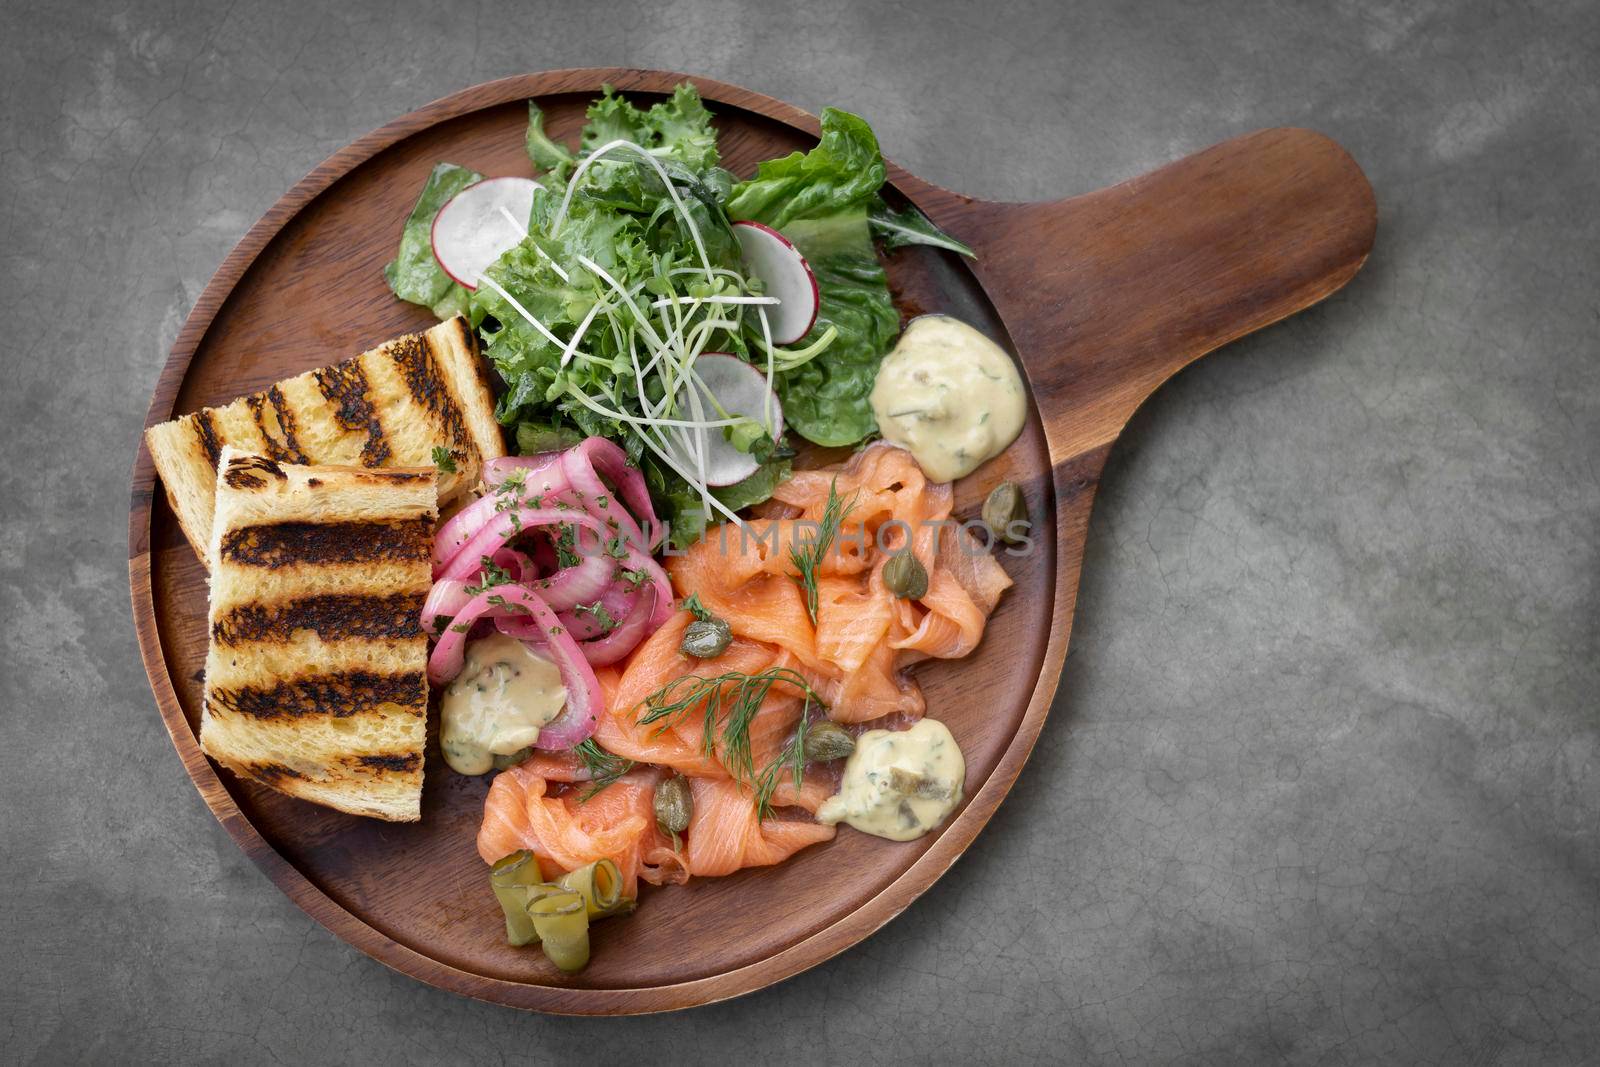 smoked salmon gourmet scandinavian food appetizer platter in sweden restaurant by jackmalipan